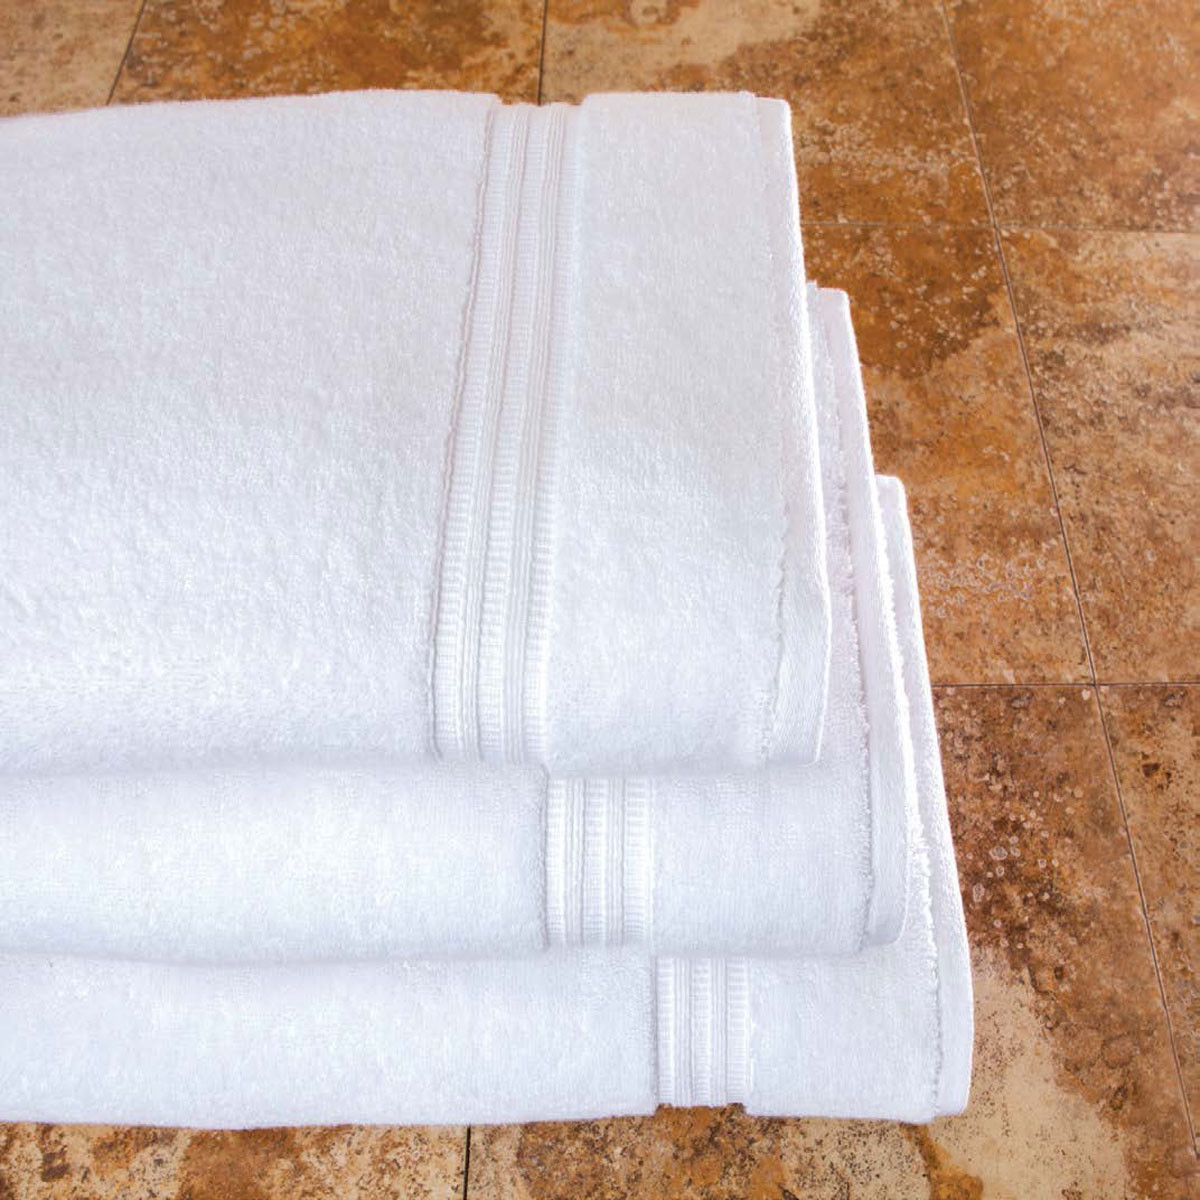 Can the hotel villa borghese lucca towel collection enhance my bathroom decor?